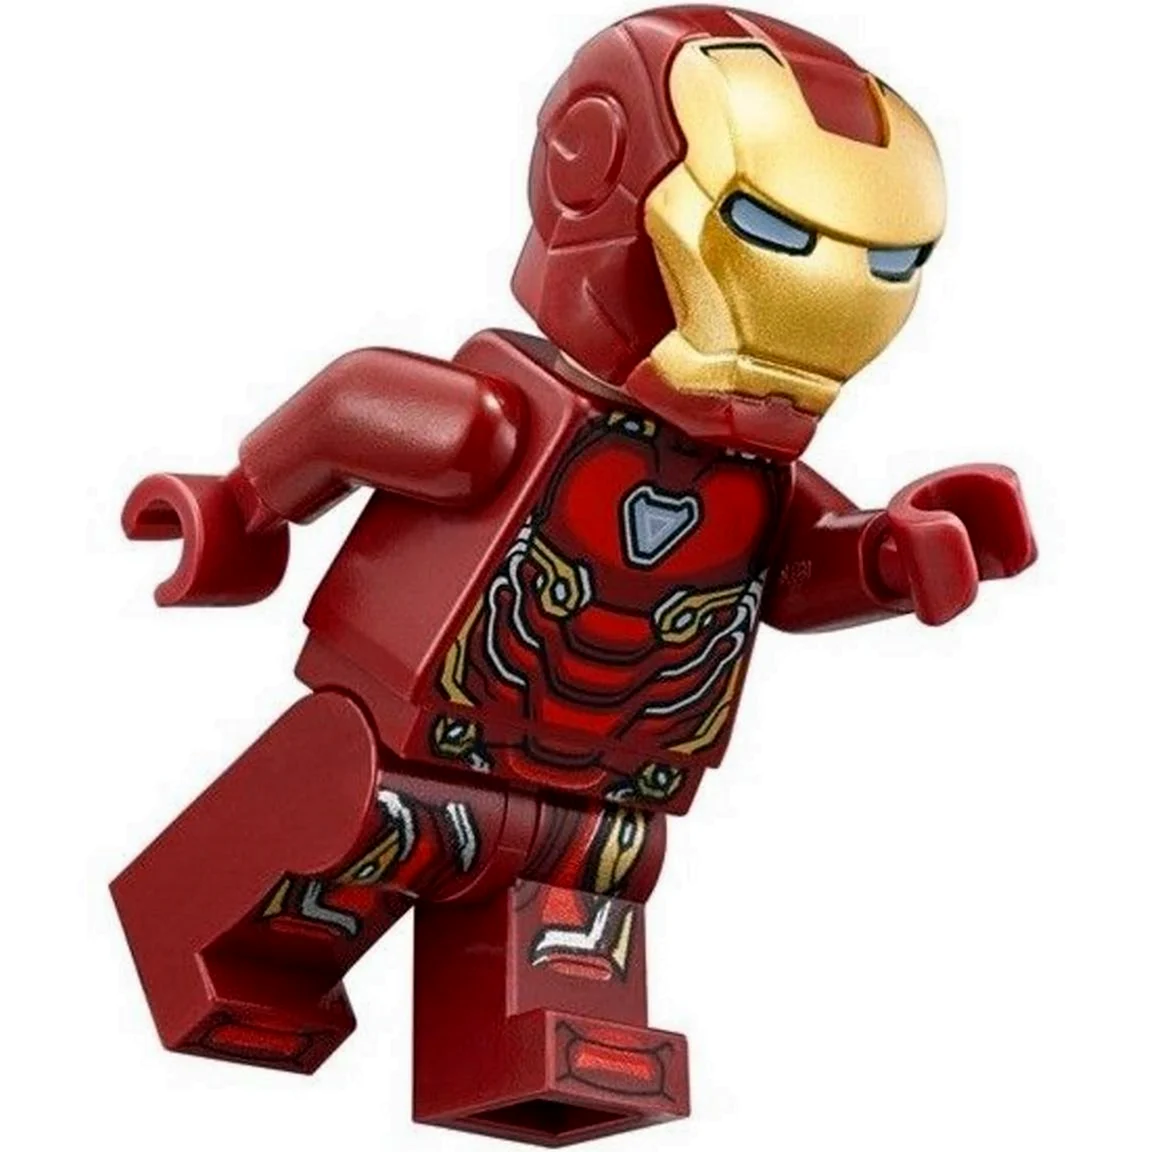 LEGO Iron man Mark 50